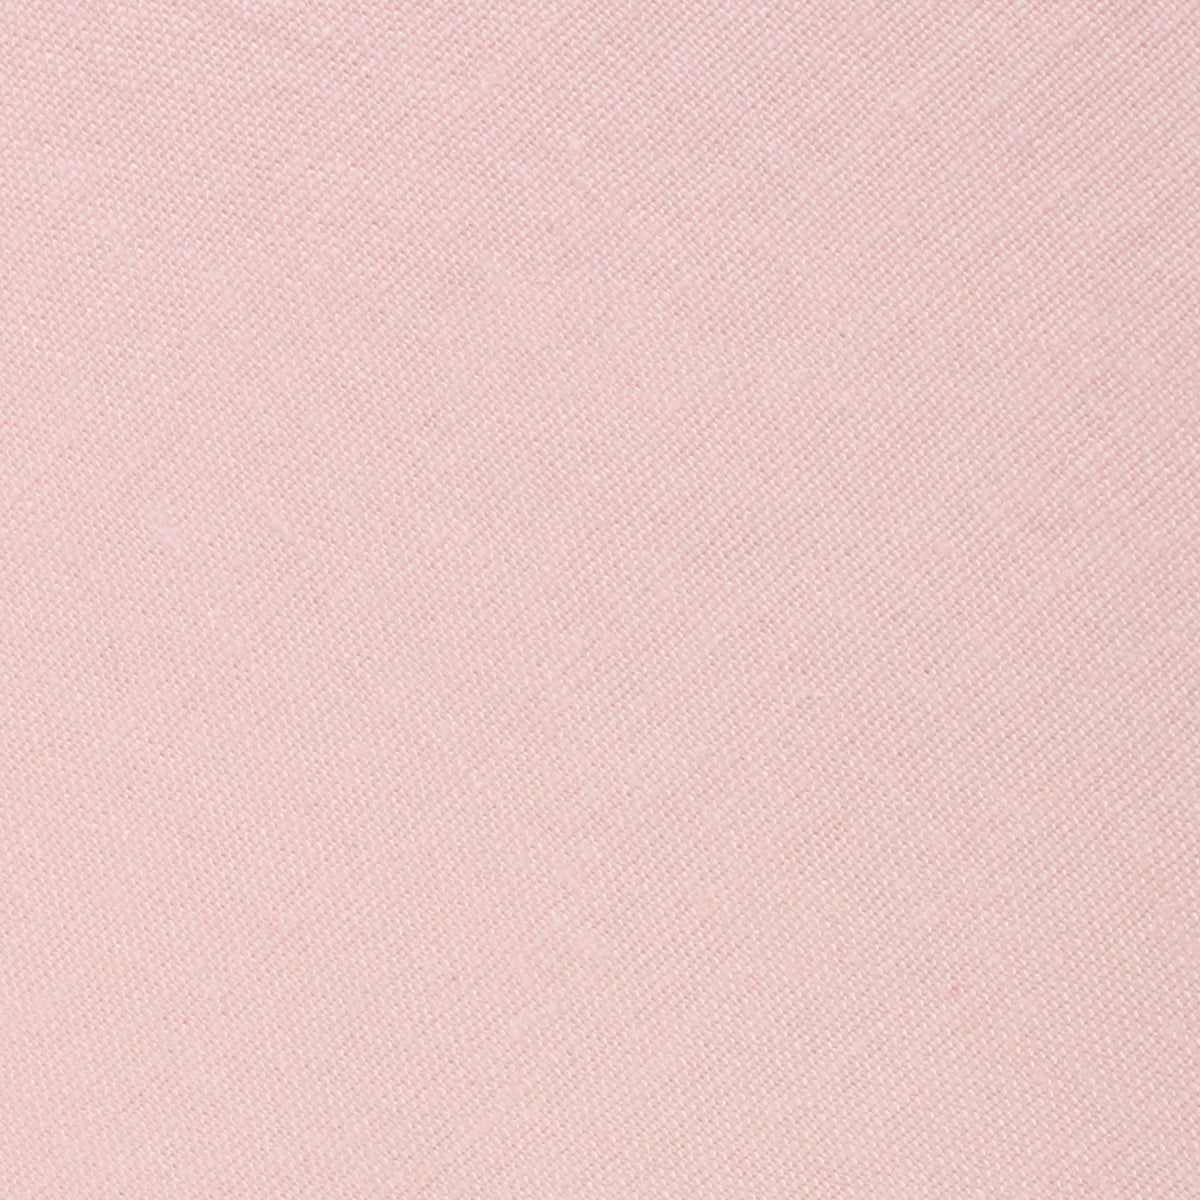 Blush Petal Pink Linen Fabric Swatch